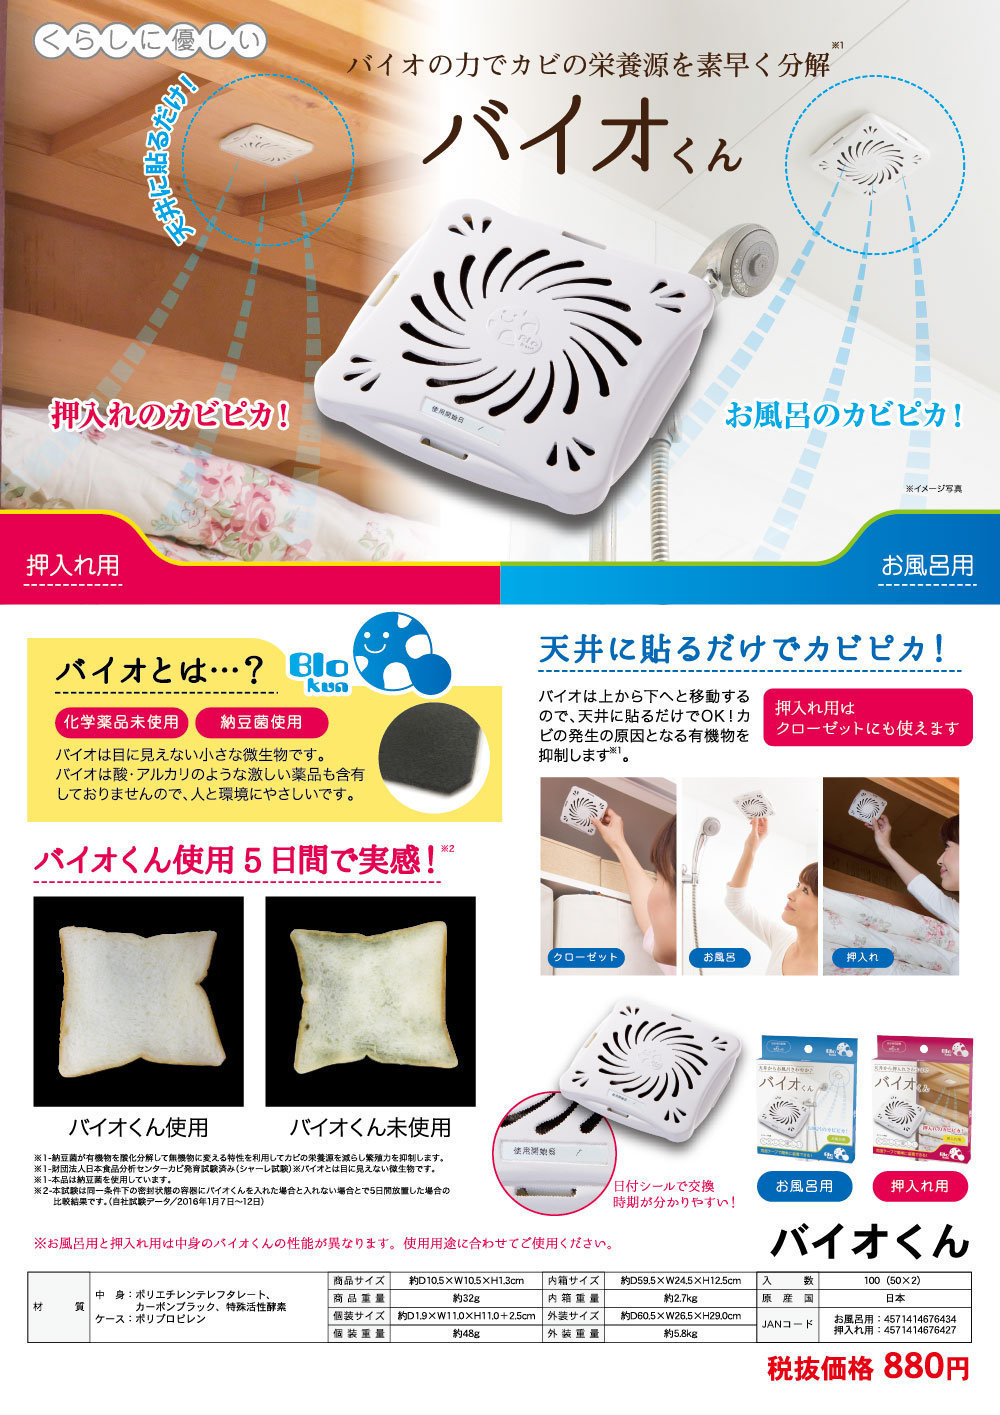 BIO kun | Bio Kun 神奇長效防霉盒(寢室用) | HKTVmall 香港最大網購平台